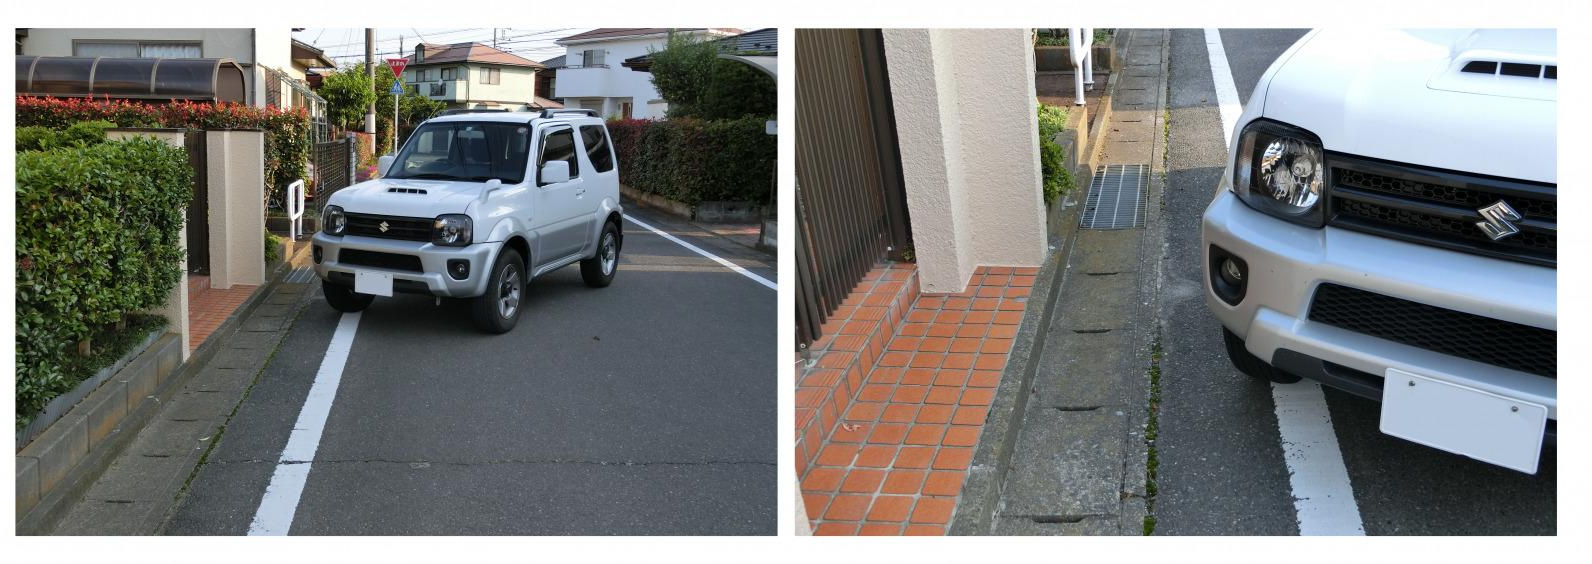 Parking 4 画像 バック駐車 車庫入れで簡単にまっすぐスマートに決めるコツは目線とハンドル操作 Clicccar Com